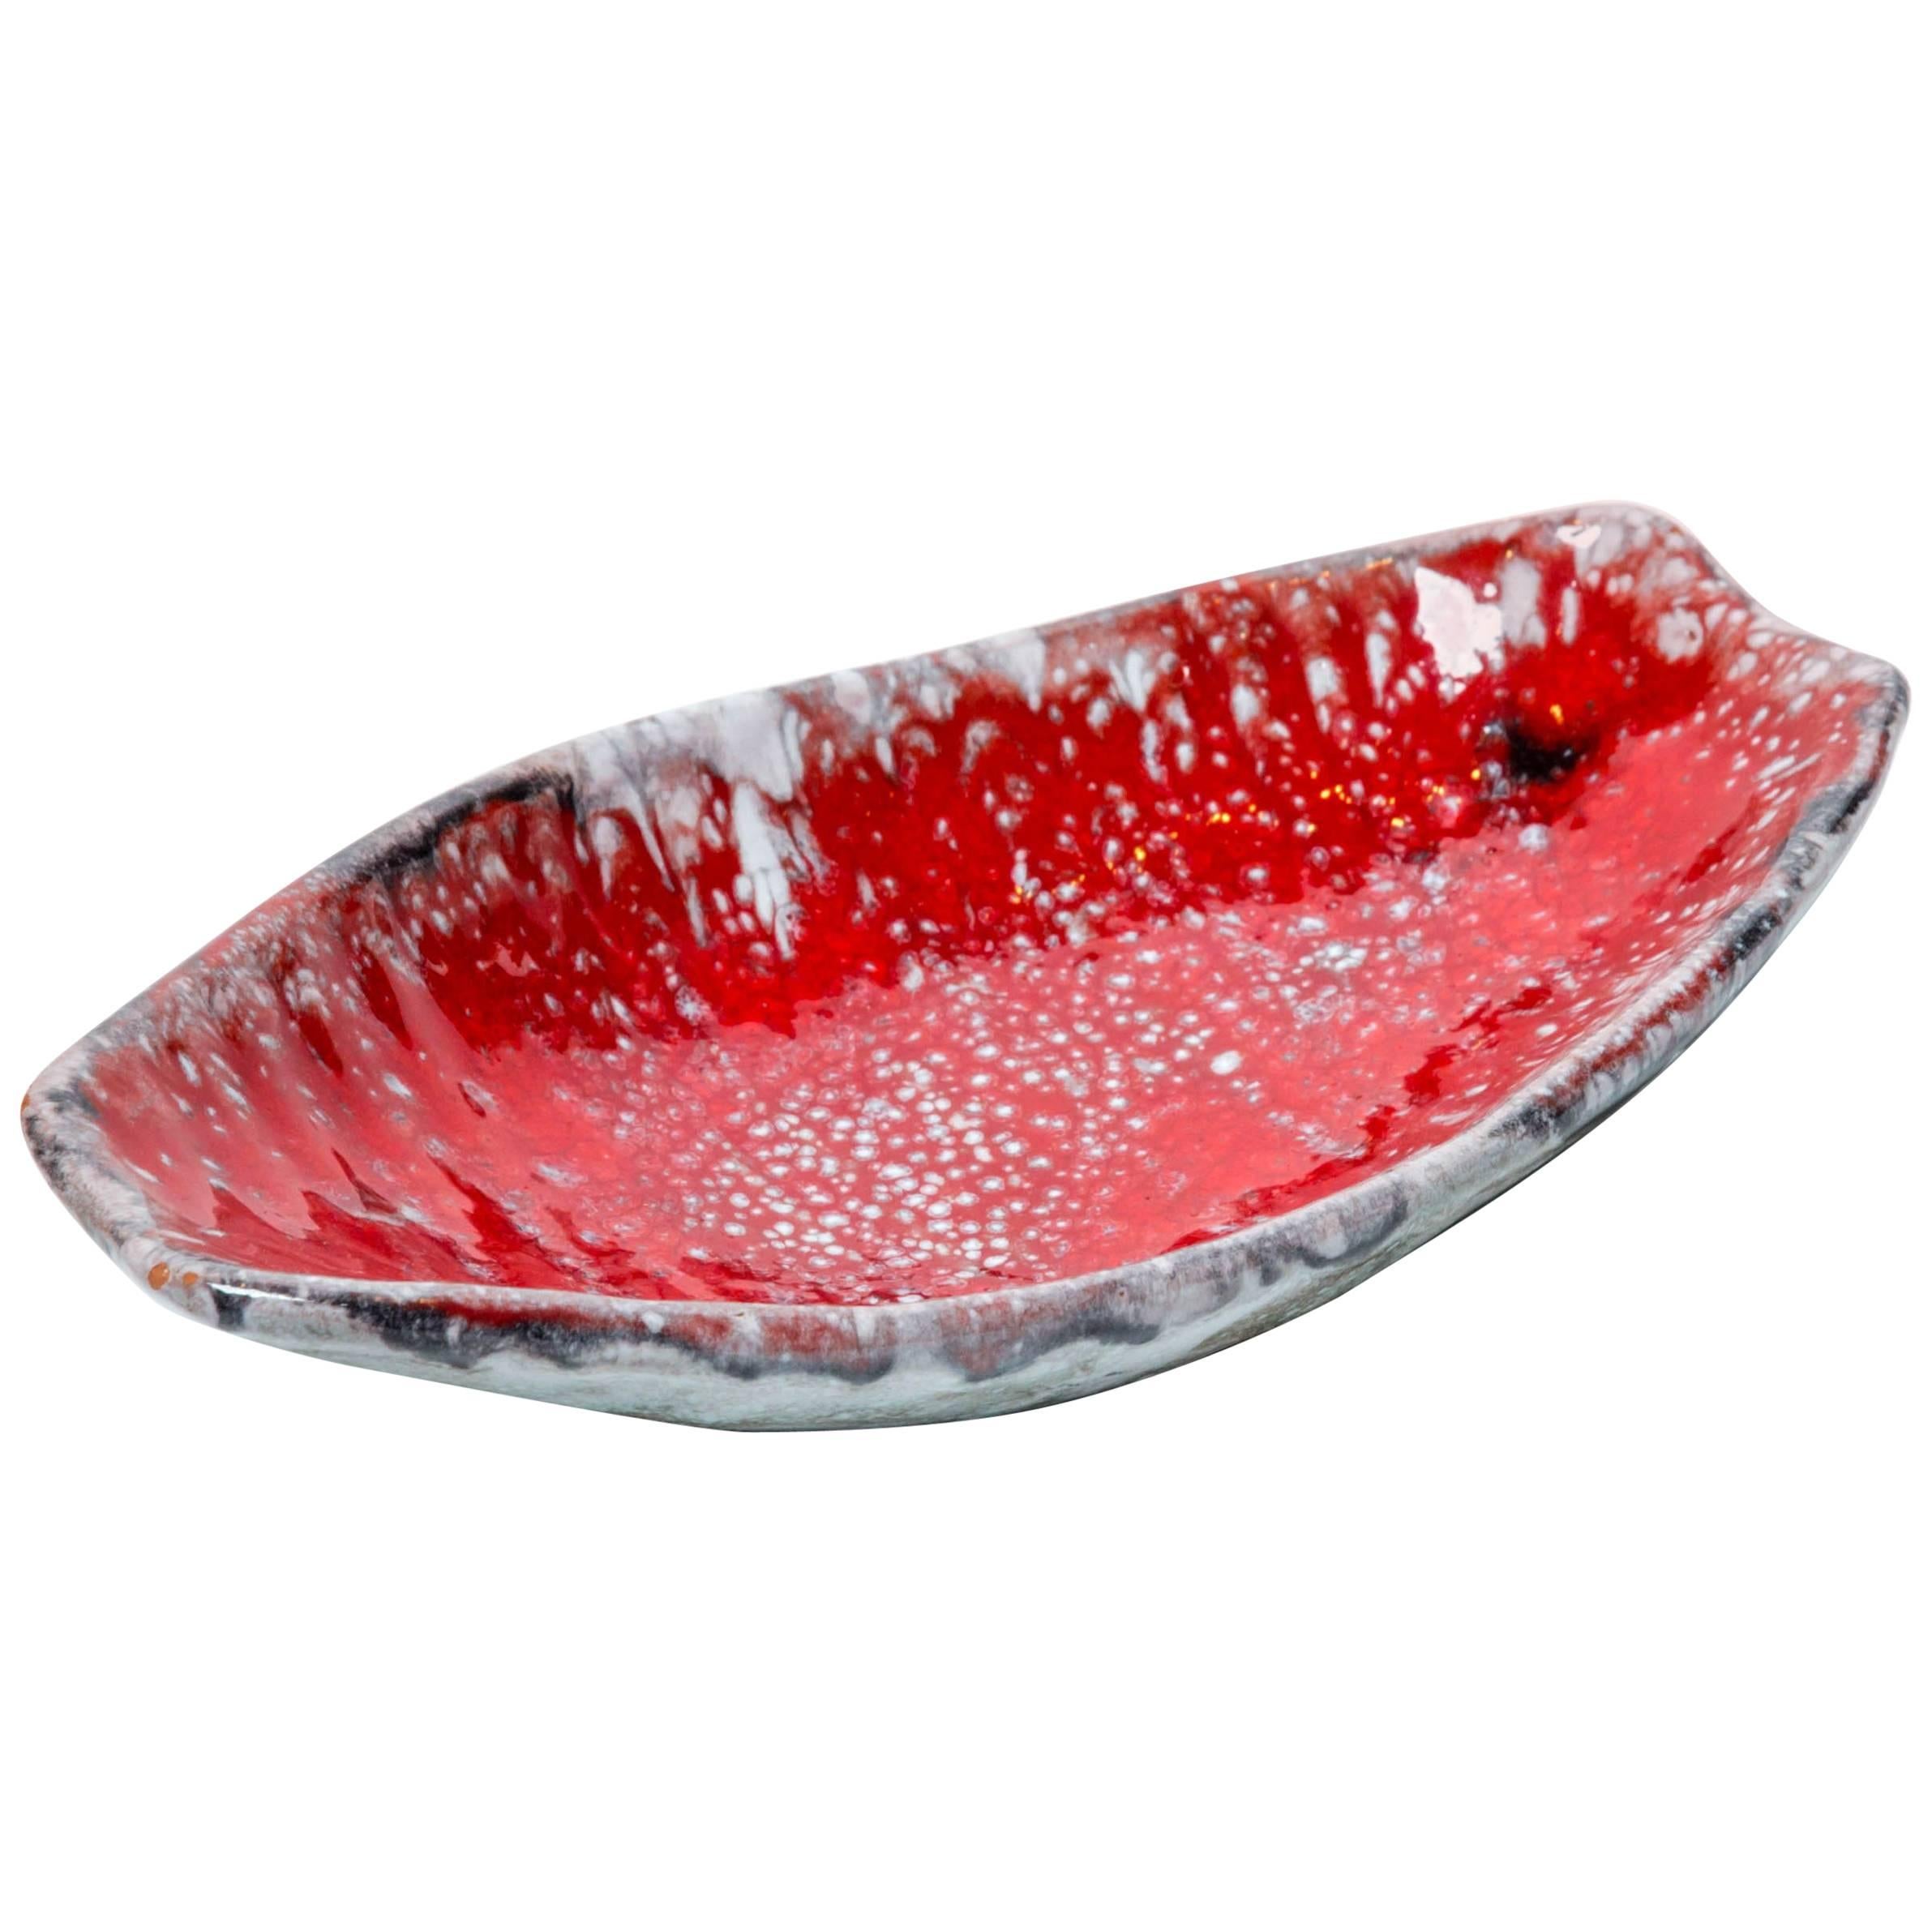 Red Glazed Ceramic Dish by Arlette Roux Juan